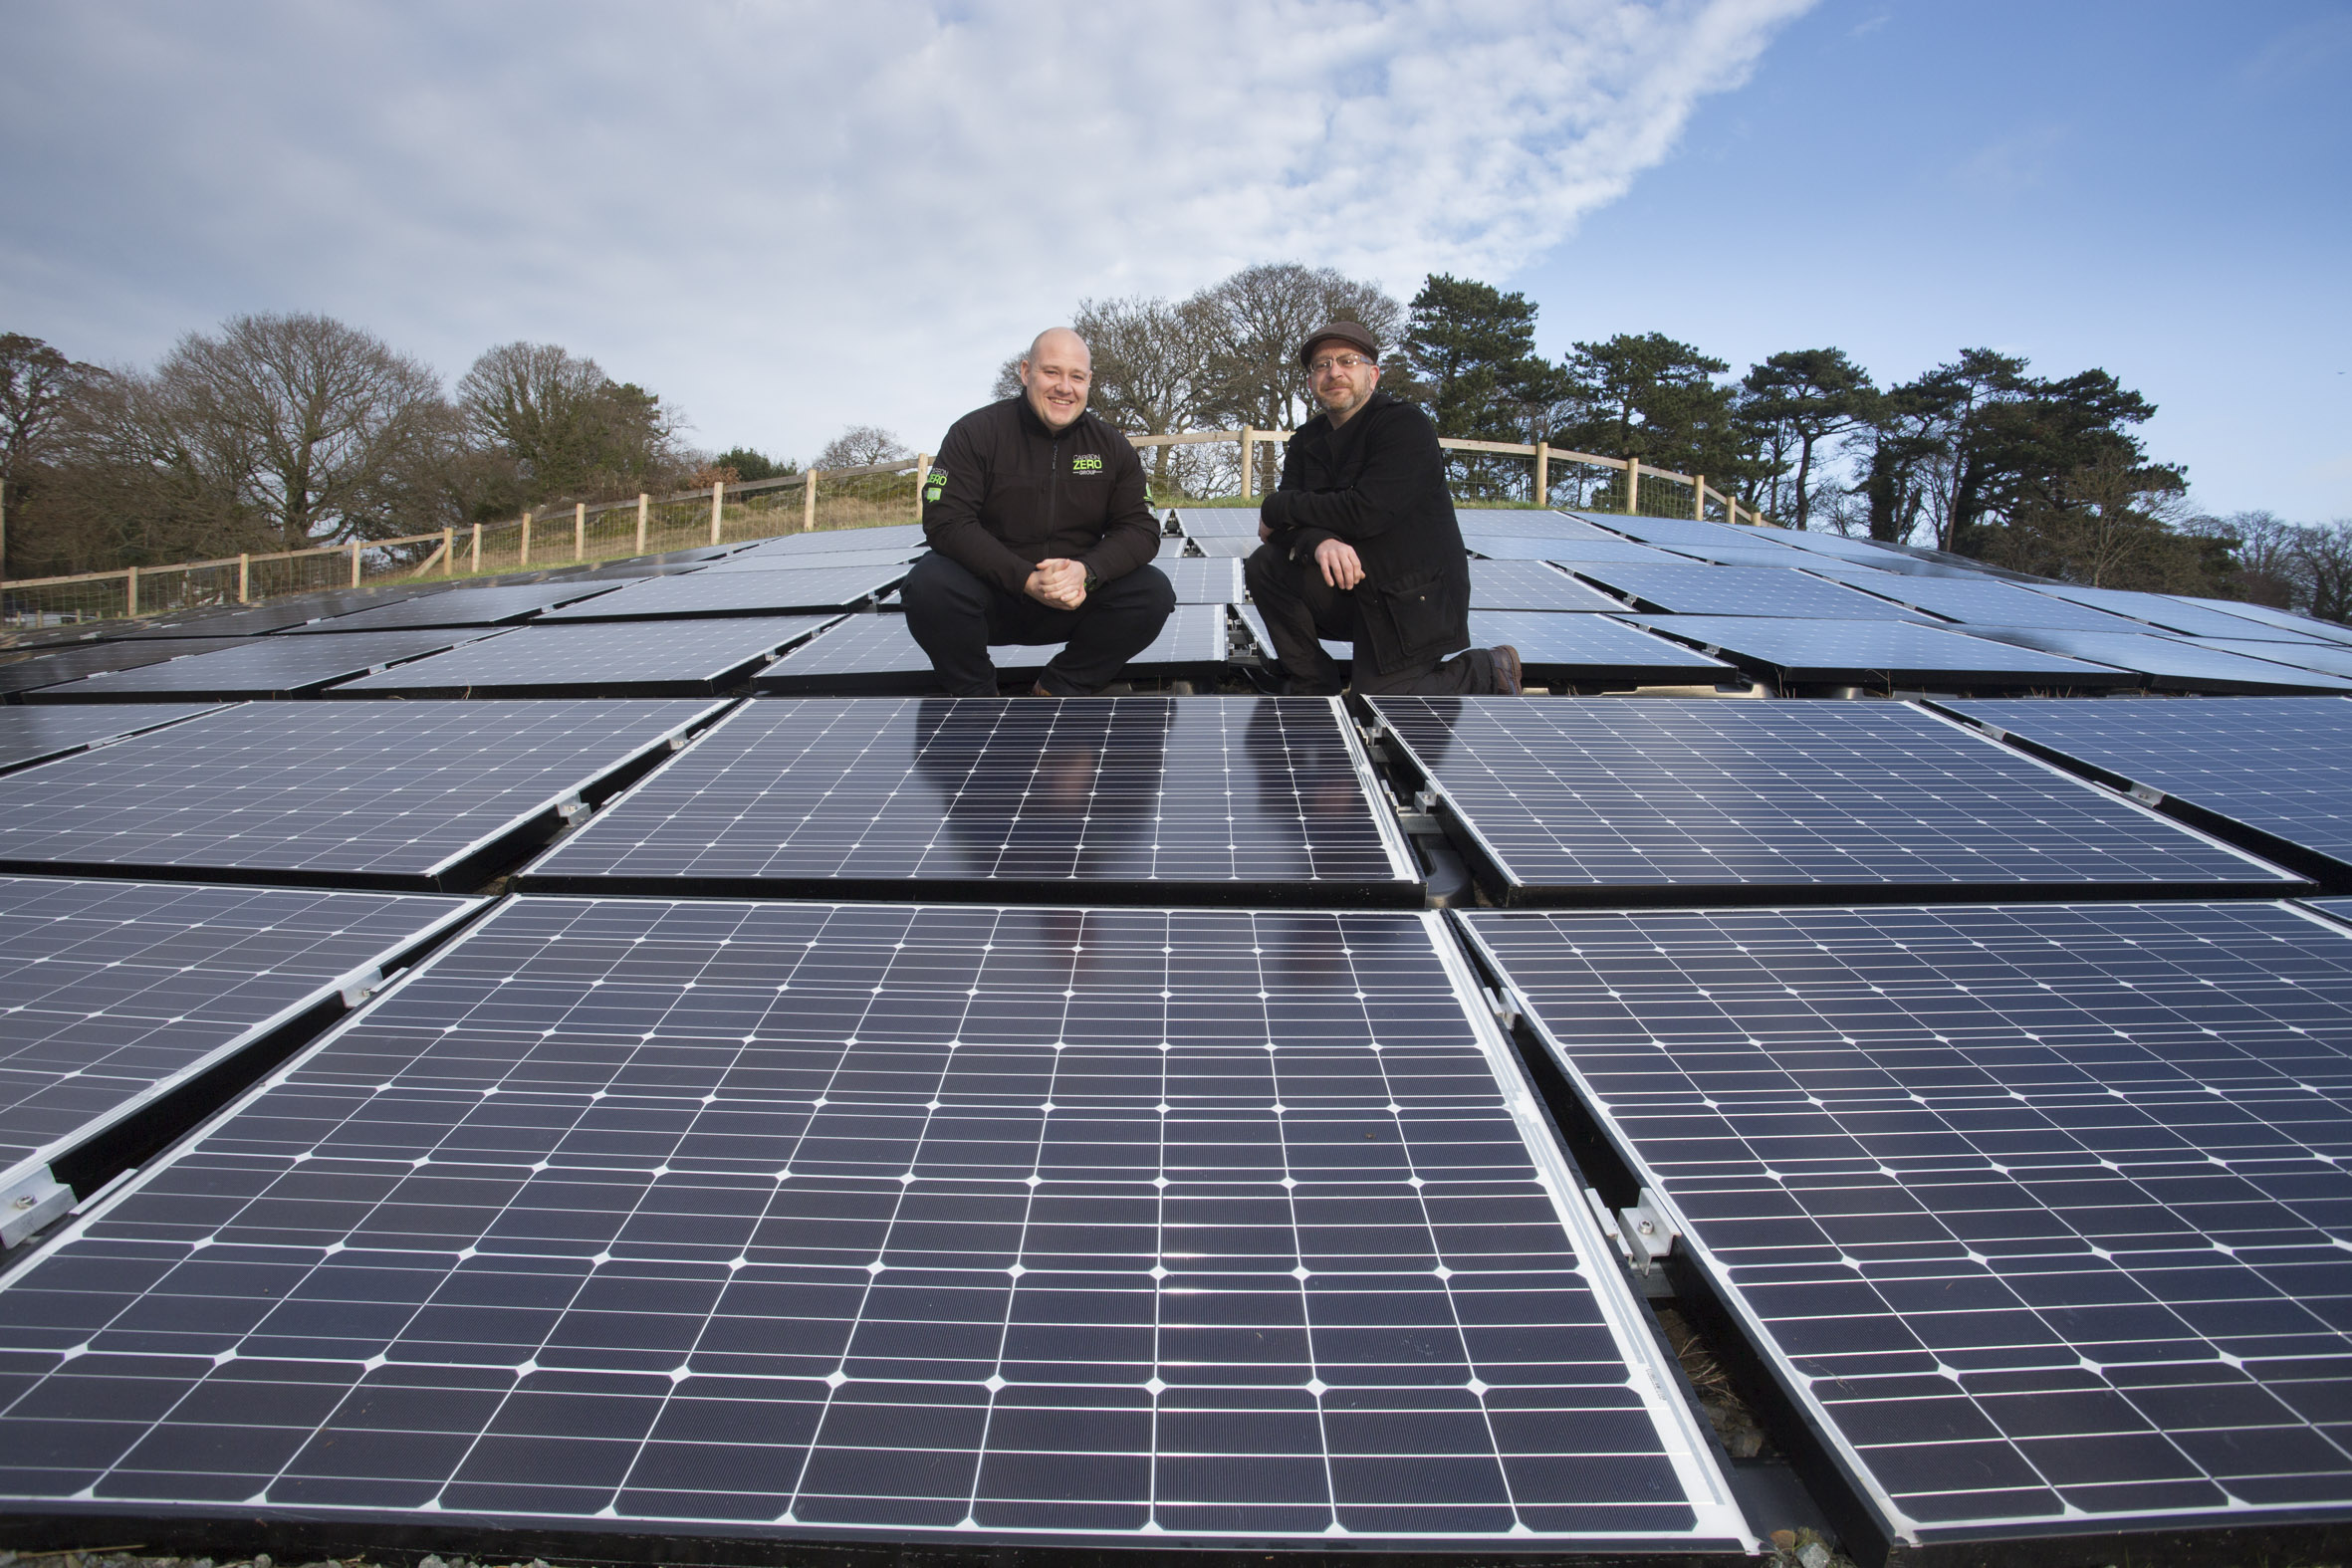 Artistic solar scheme hailed as global icon